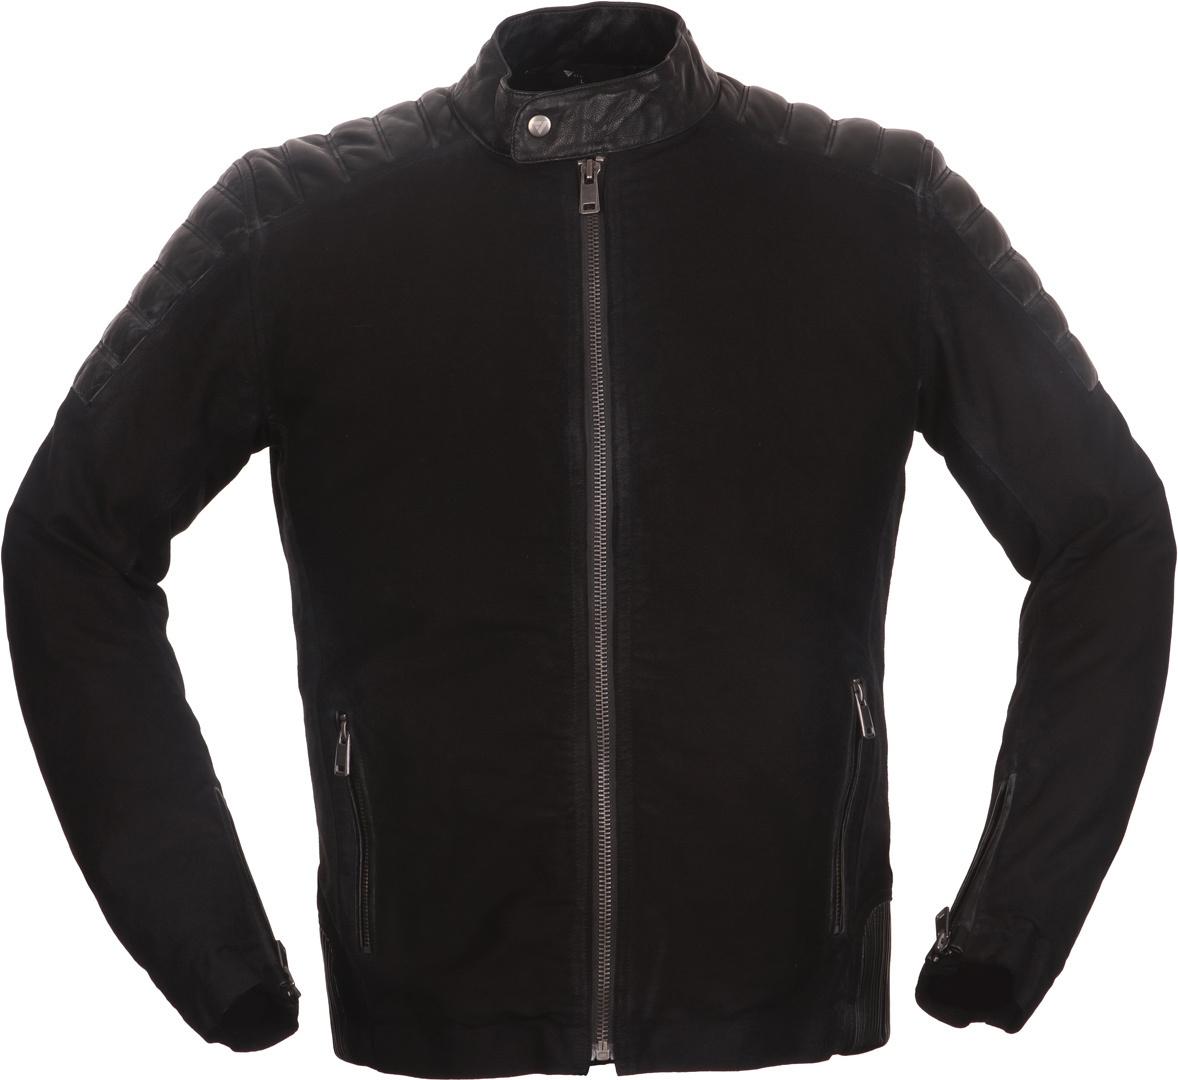 Modeka Dyke Motorrad Textiljacke, schwarz, Größe 4XL, schwarz, Größe 4XL